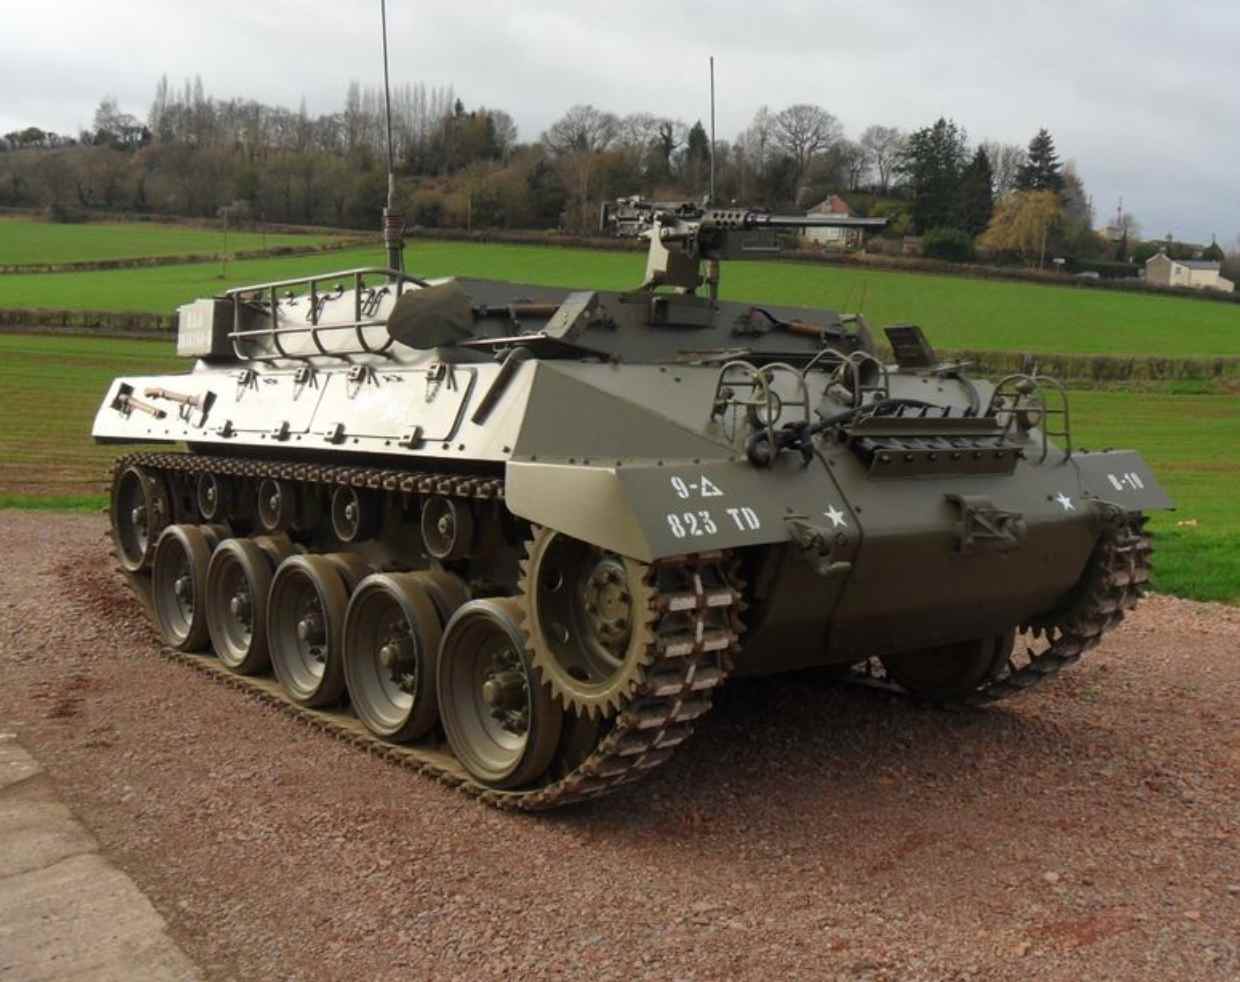 M39 AUV, military tanks for sale to civilians